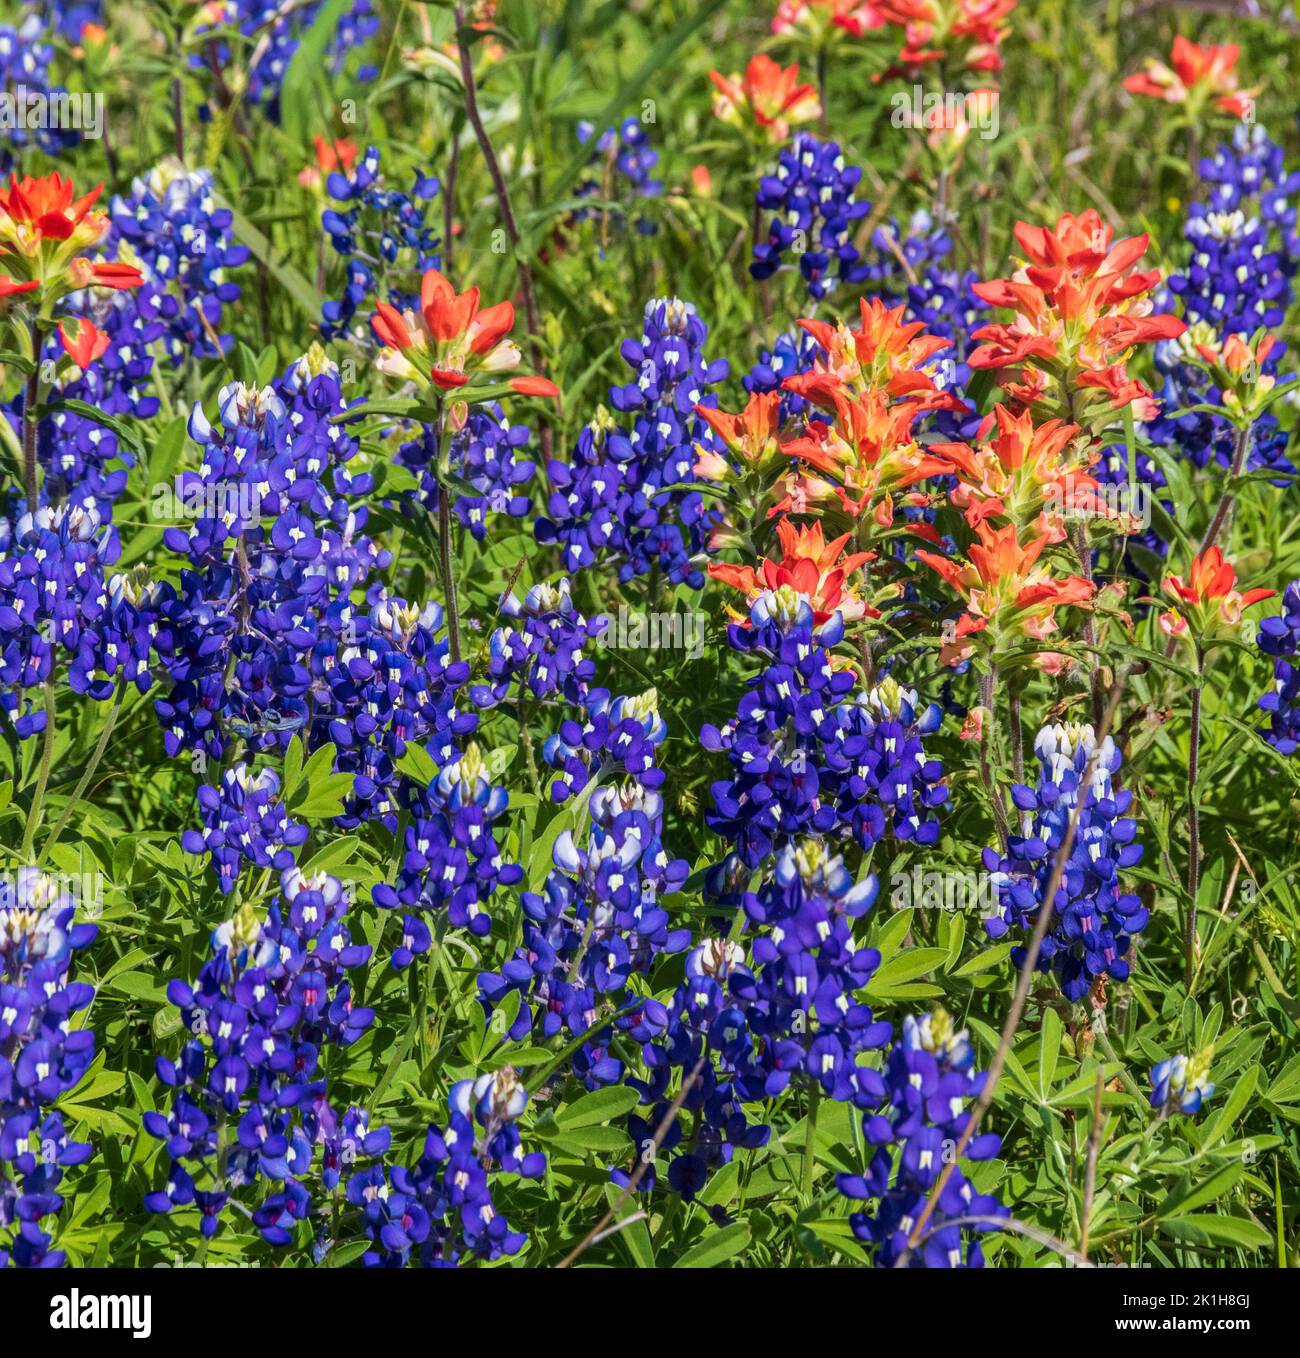 Fields of Texas wildflowers in April near Whitehall, Texas. Stock Photo